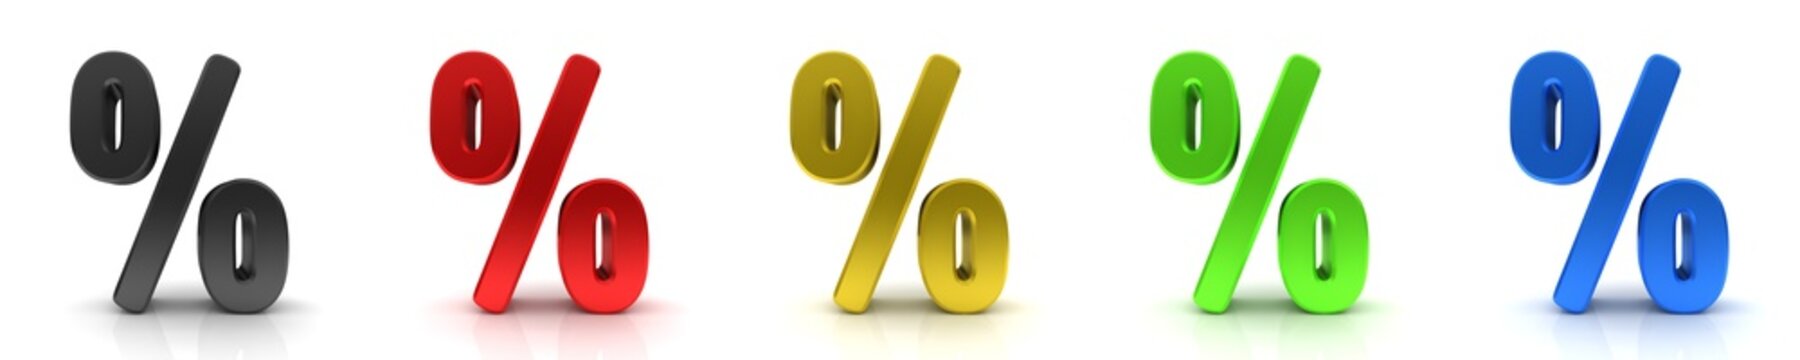 Percent Percentage sign 3d per cent symbol % icons black red gold blue green 